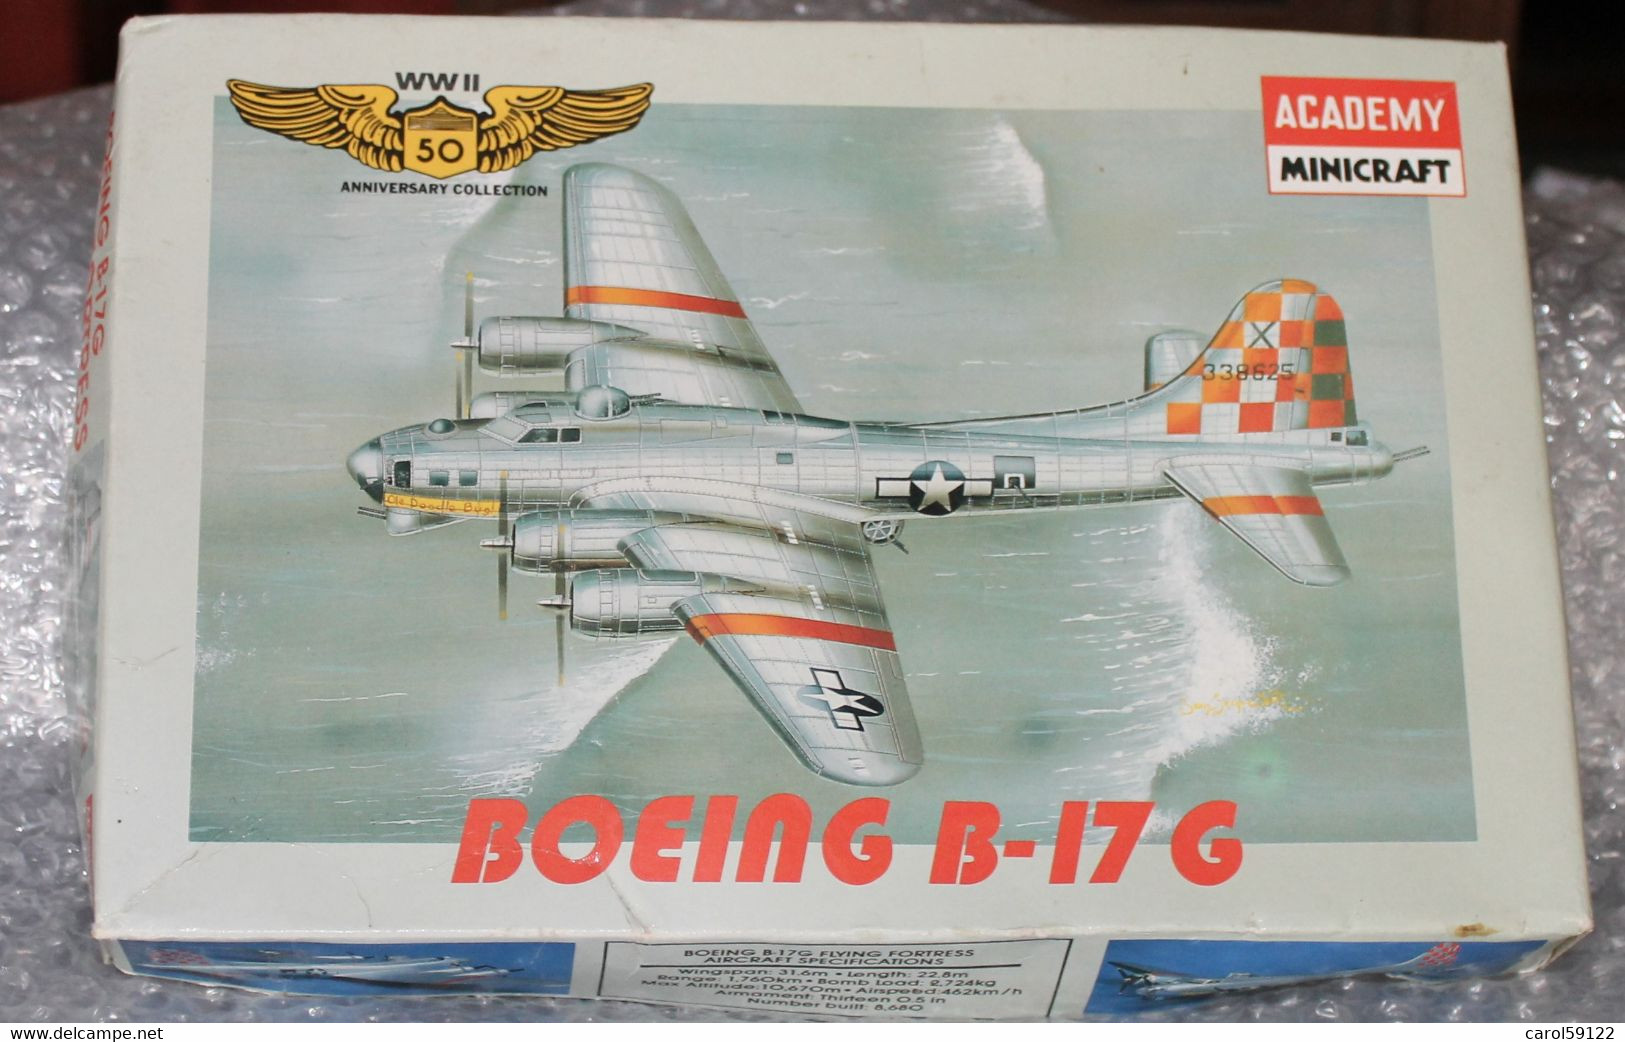 ACADEMY Minicraft 1/144 Boeing B-17G Flying Fortress - Luchtvaart